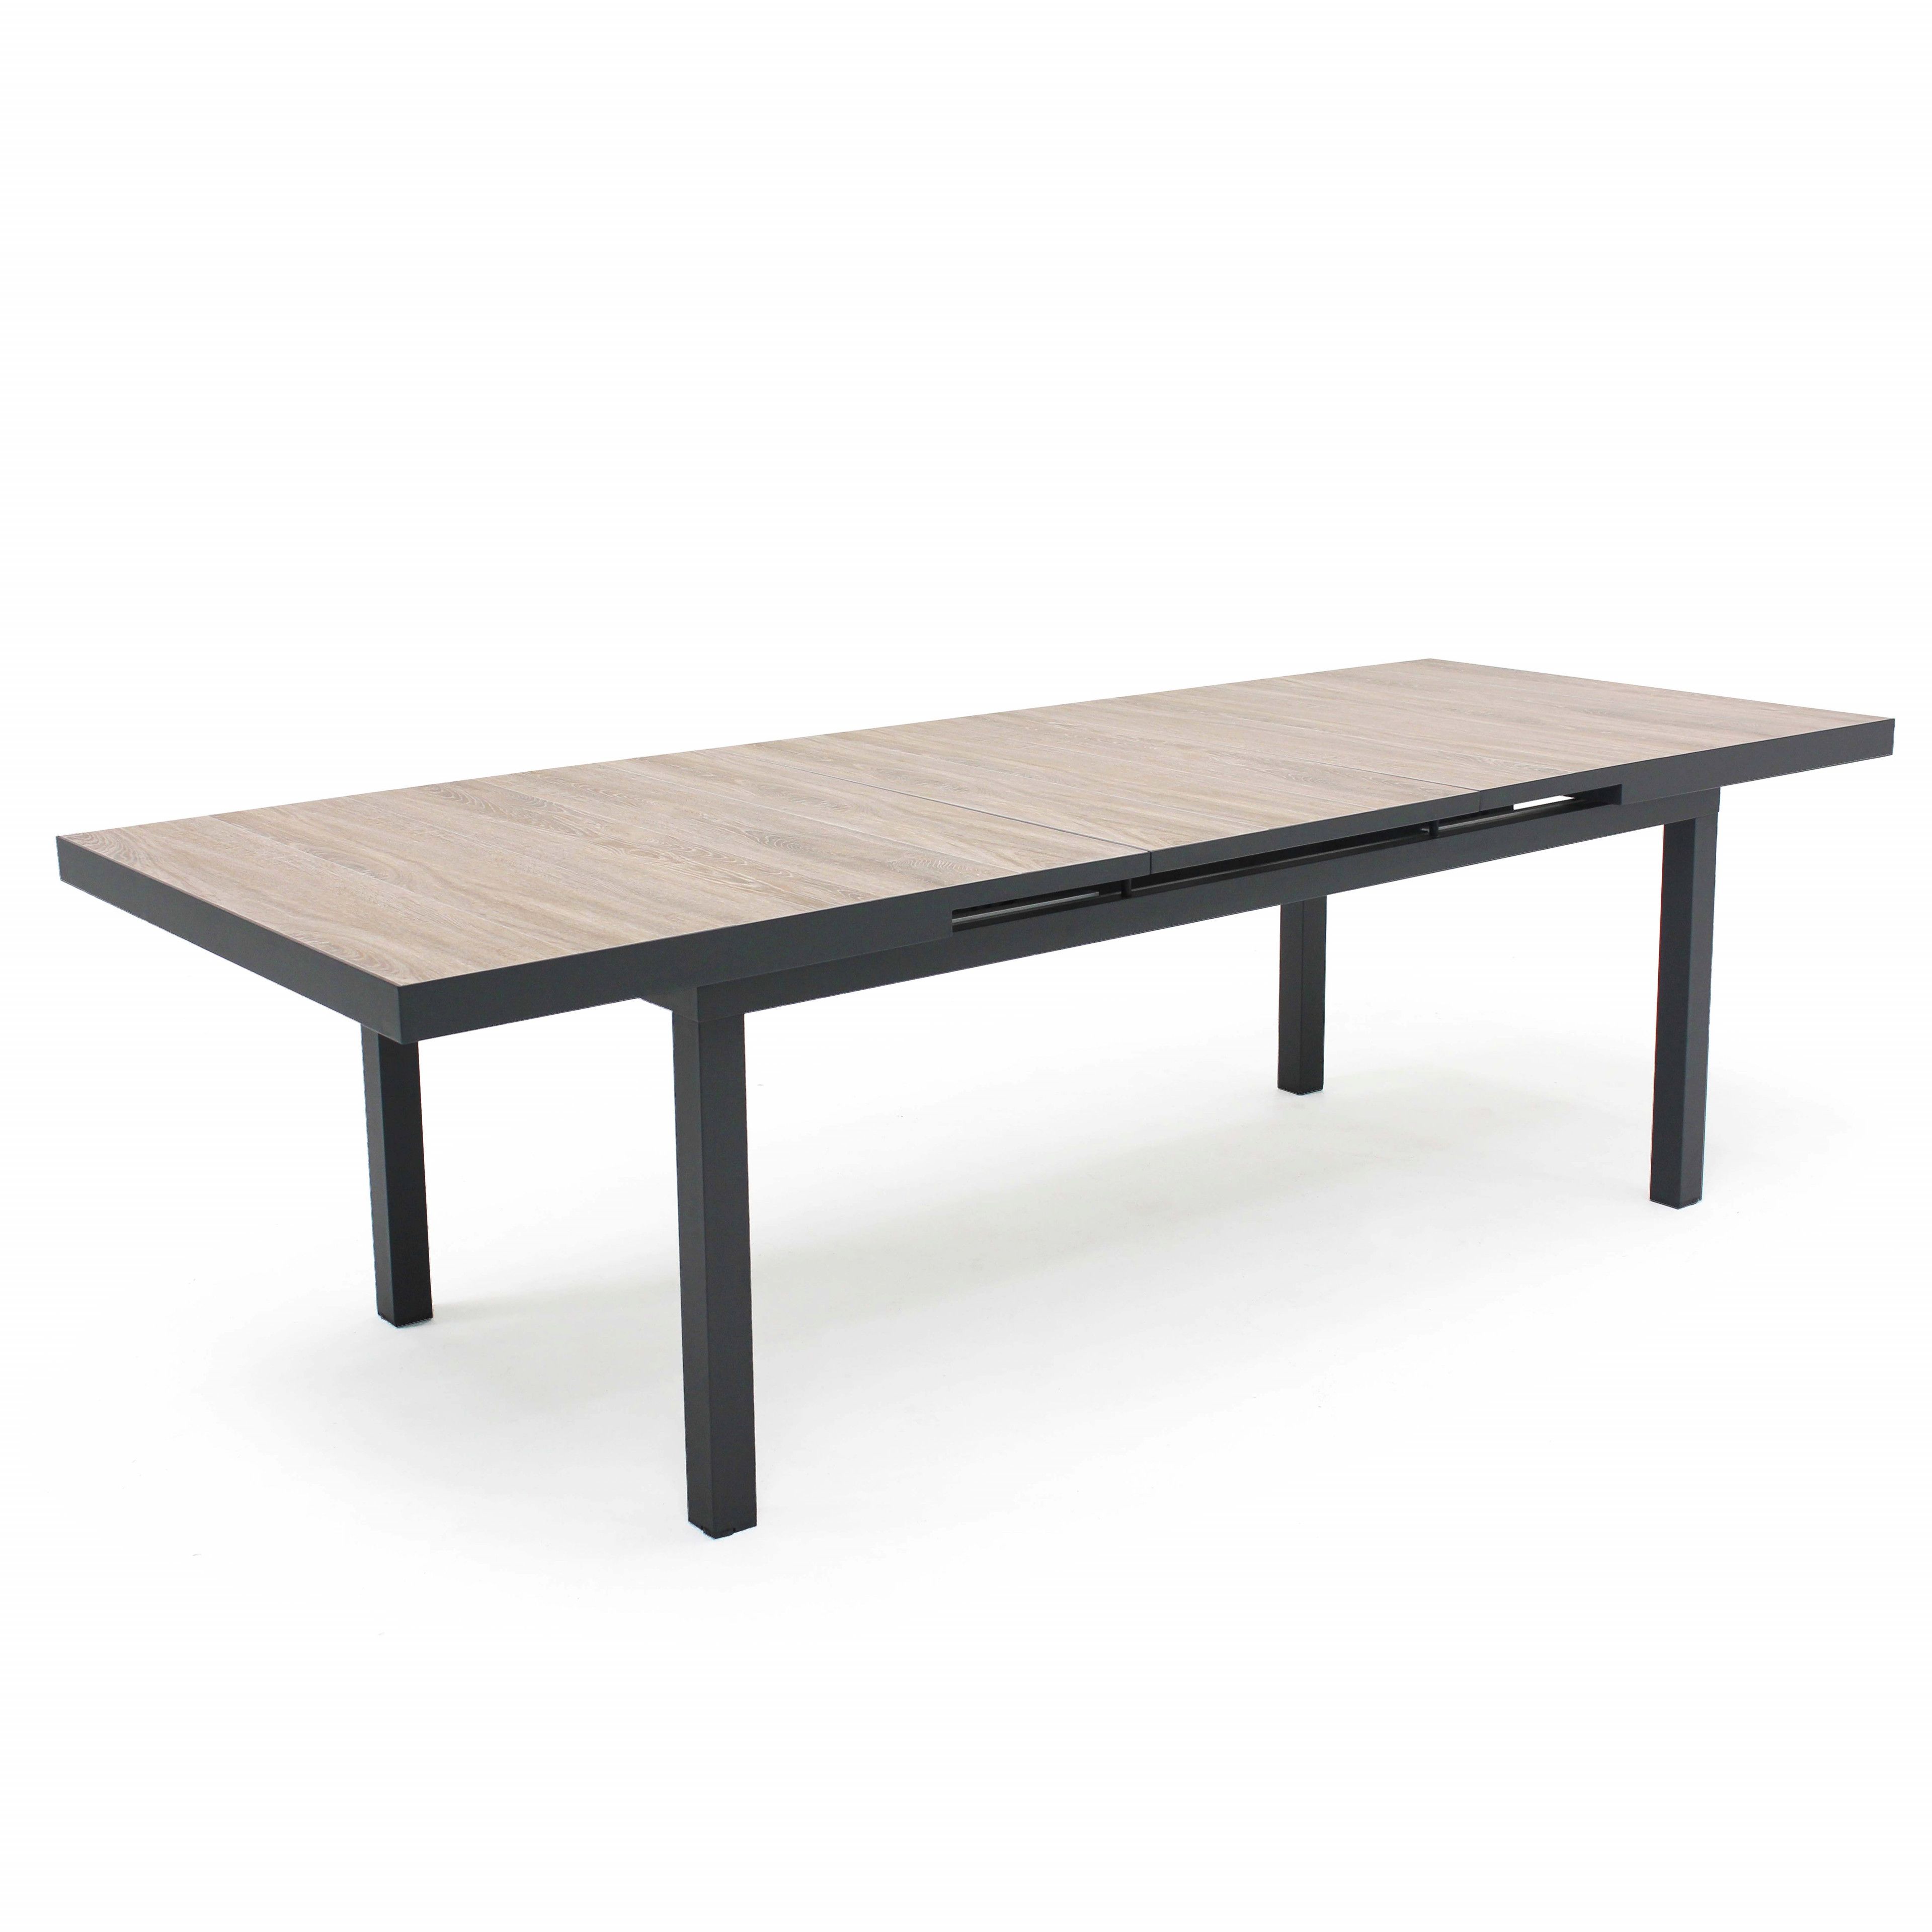 Outsunny Table de Jardin Aluminium Table Extensible avec Plateau